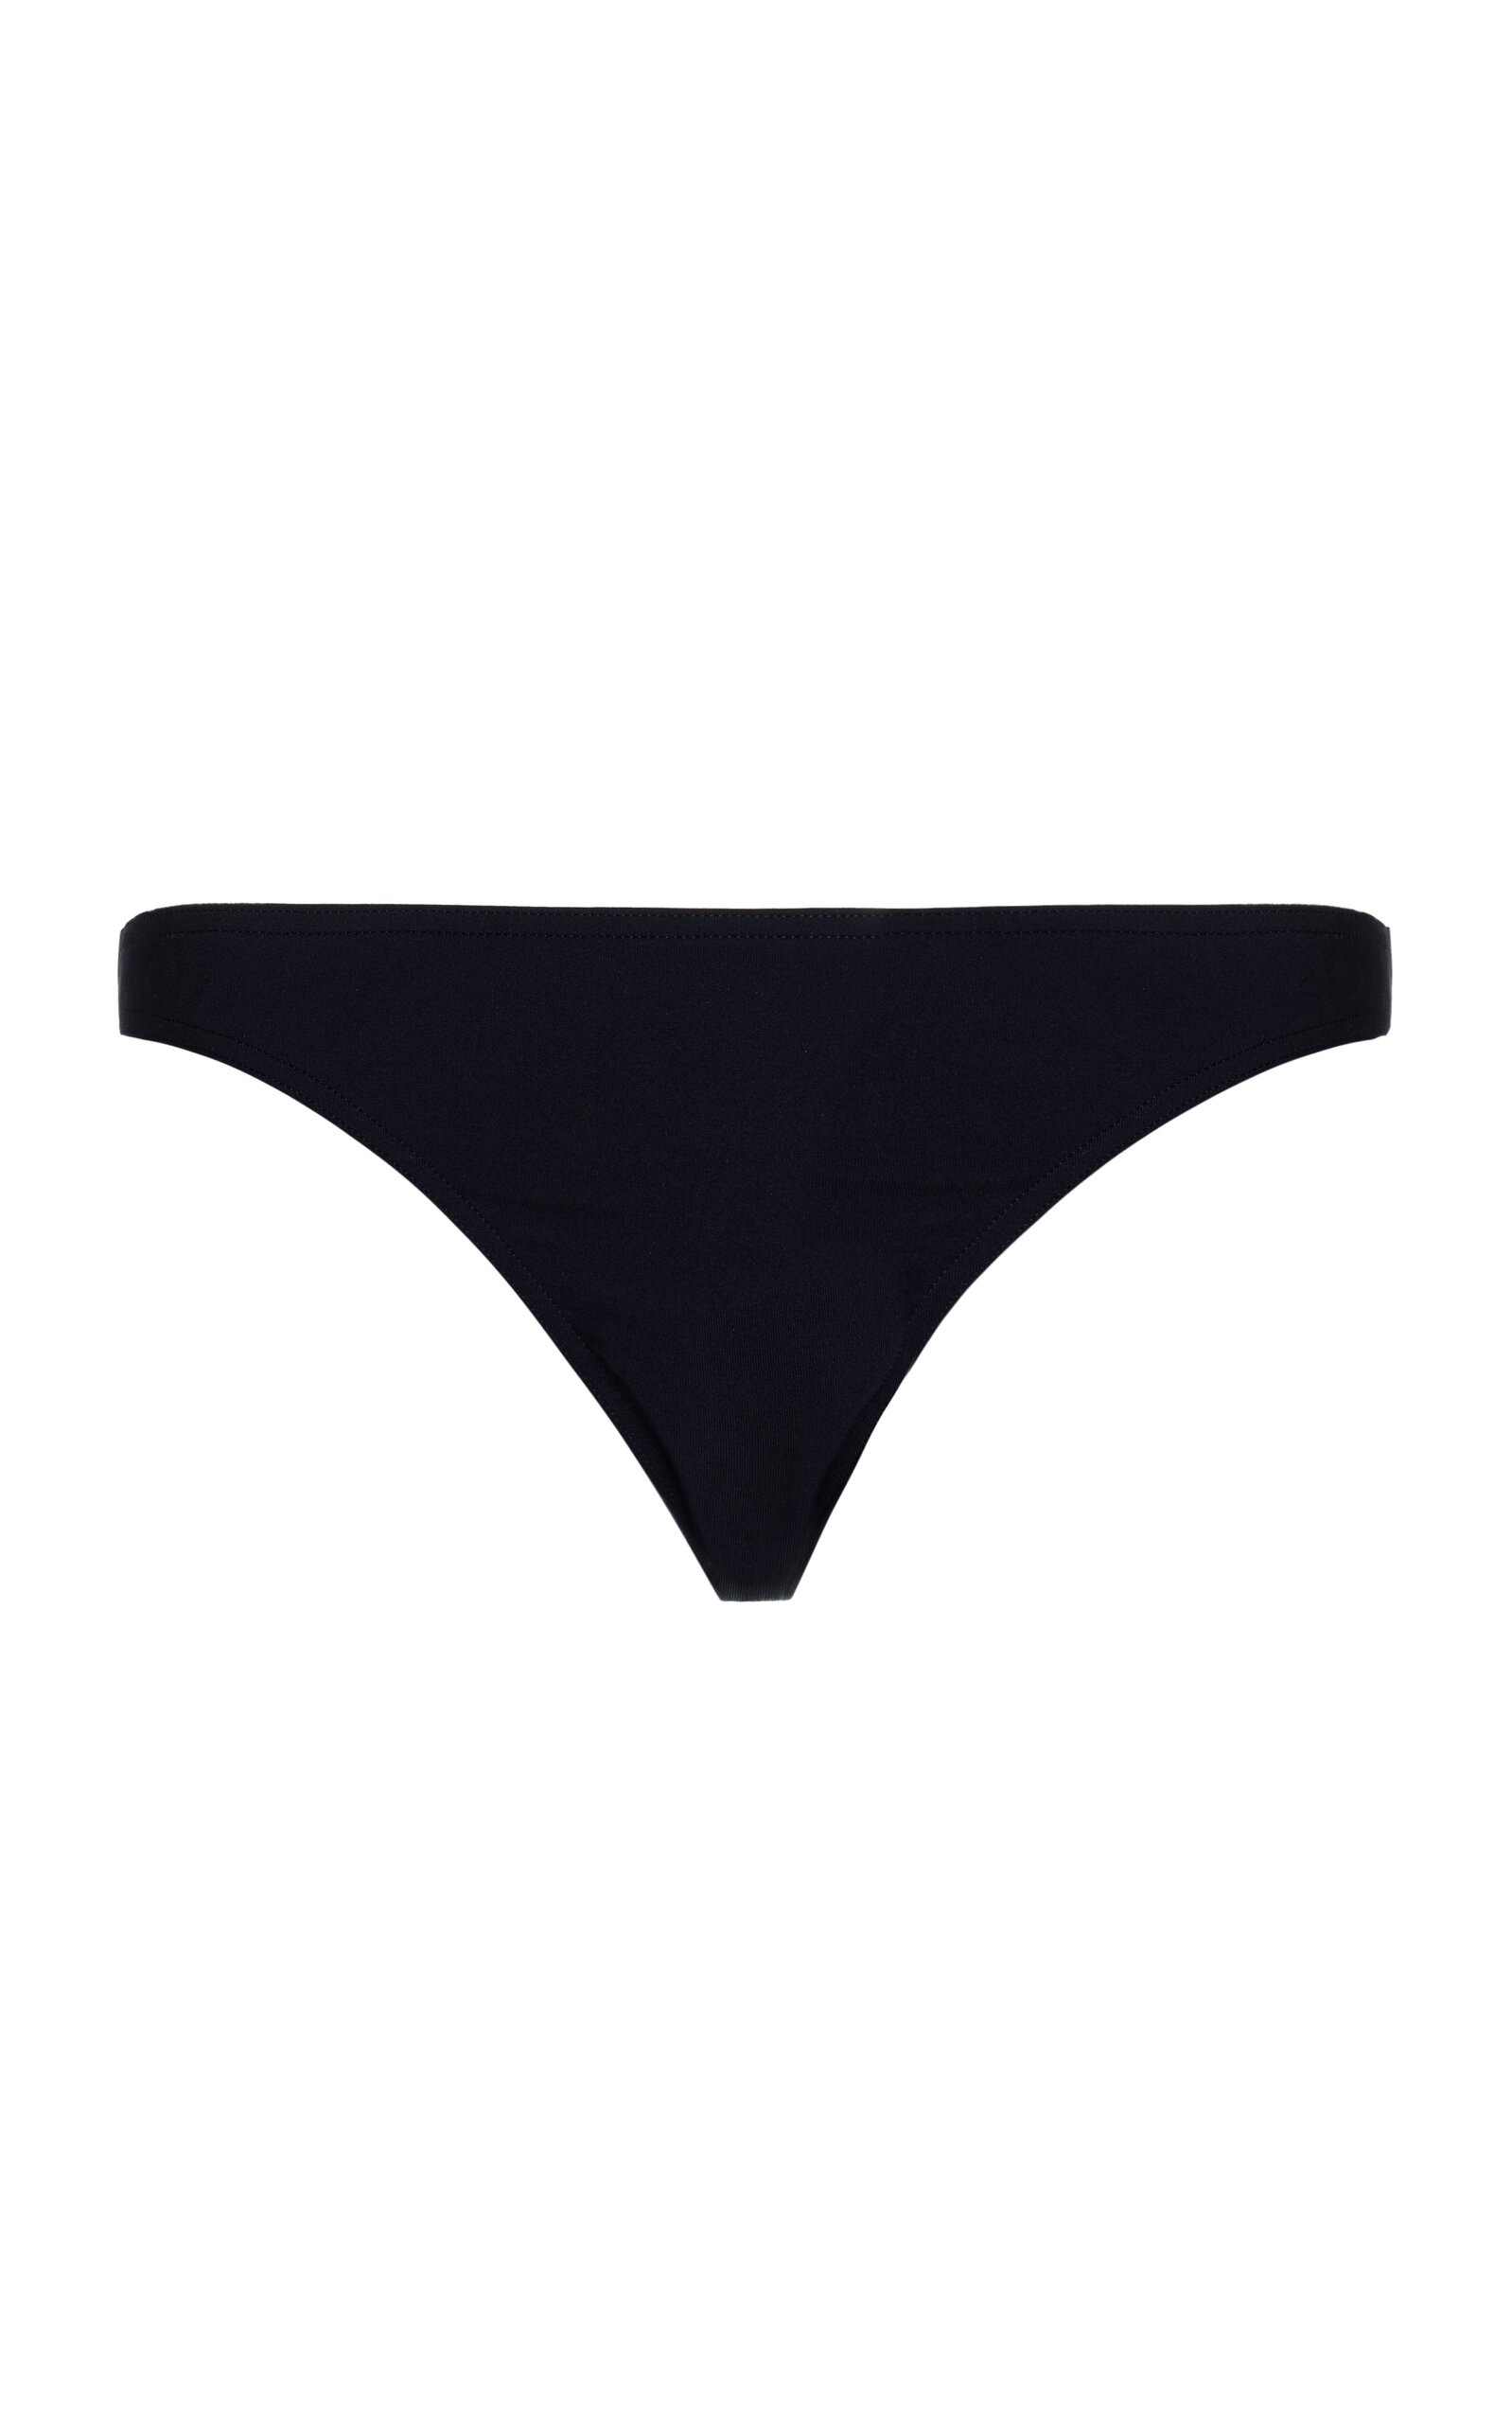 Fripon Bikini Bottom black - 1